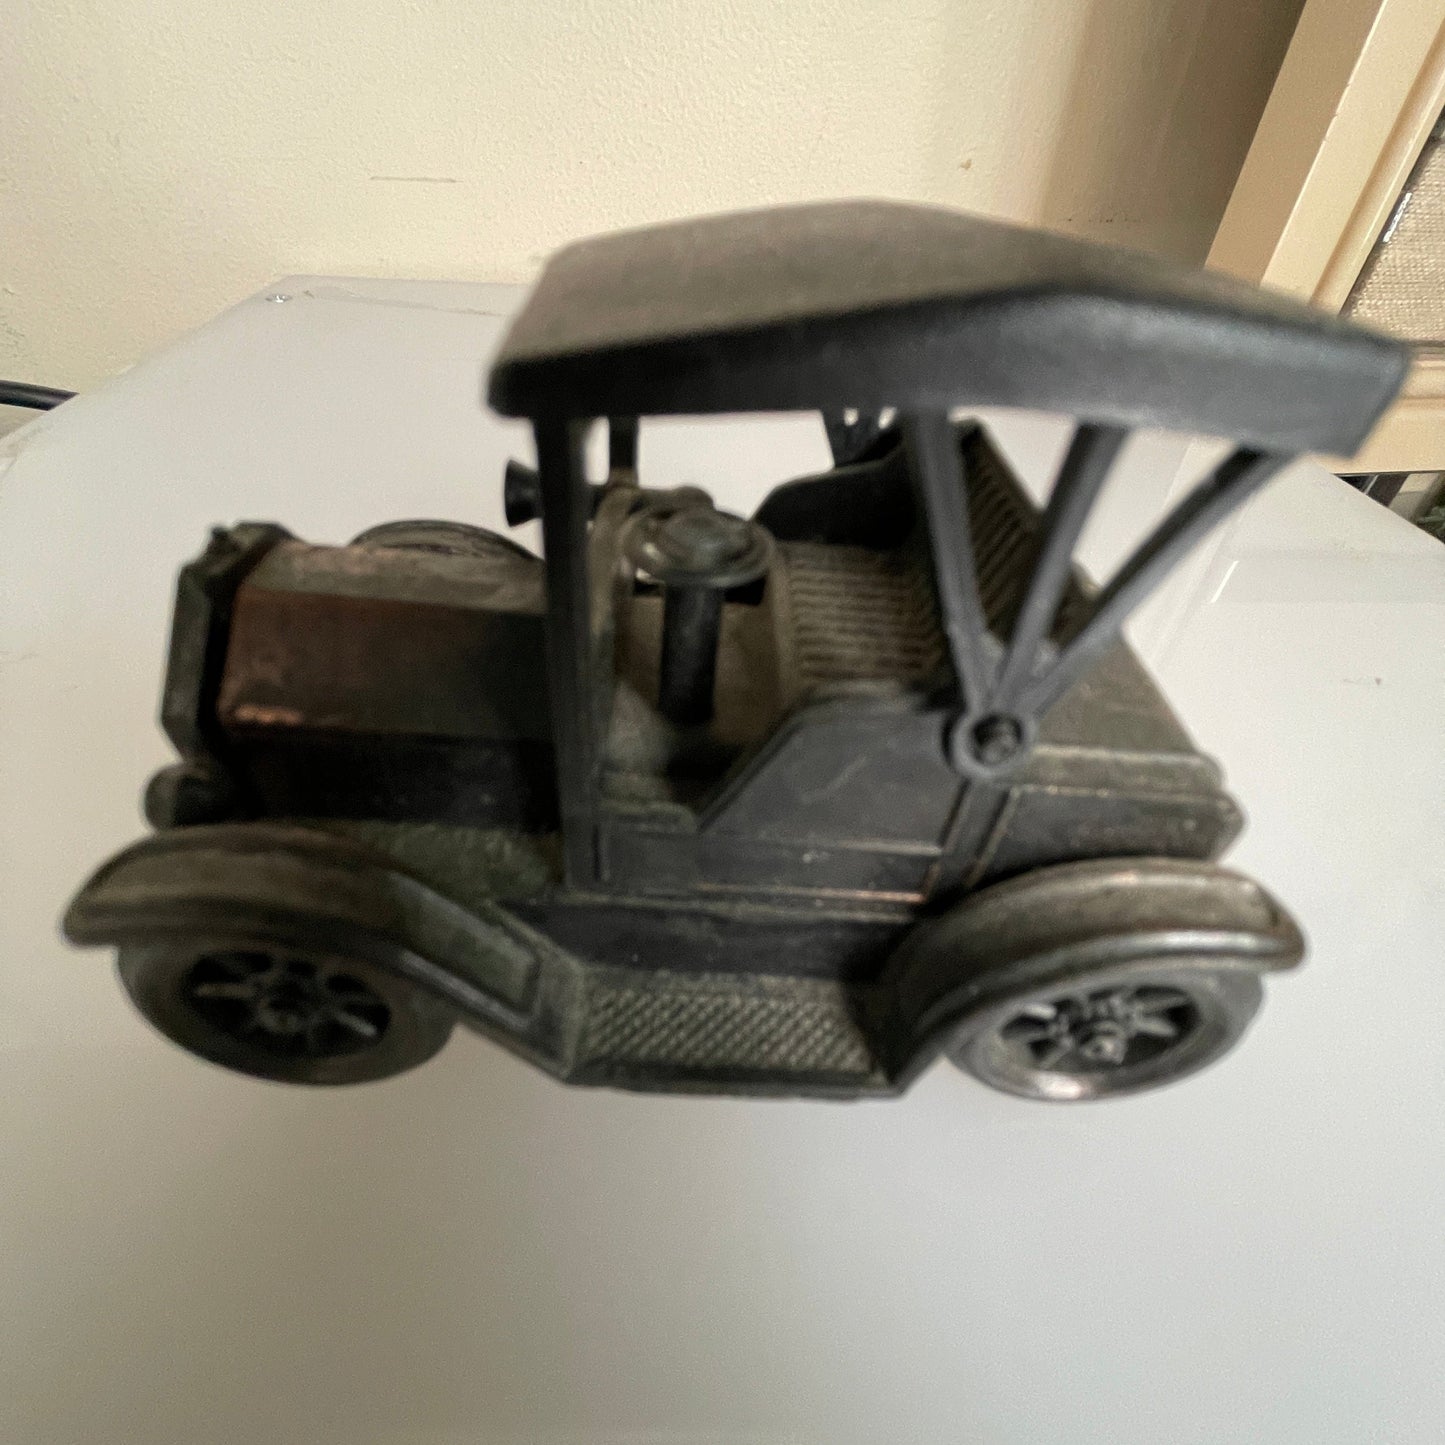 Antique motor car style vintage die-cast metal pencil sharpener